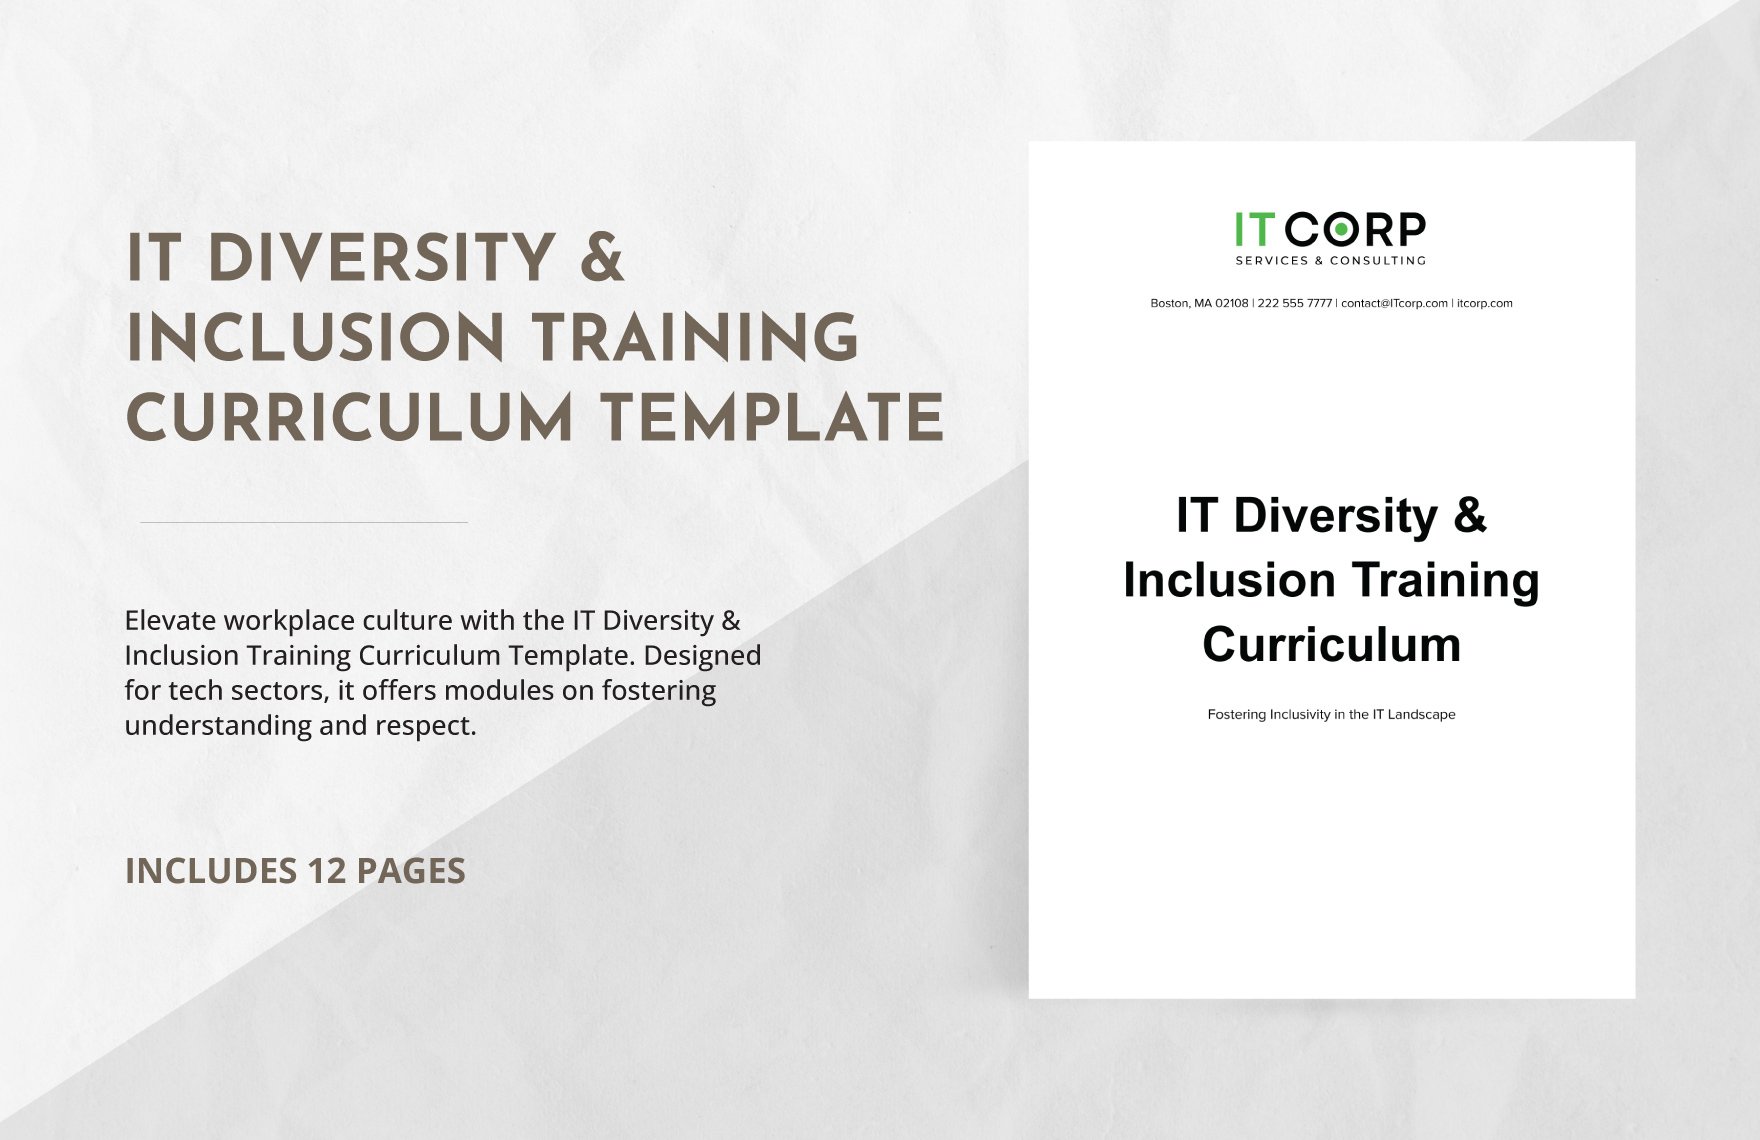 IT Diversity & Inclusion Training Curriculum Template